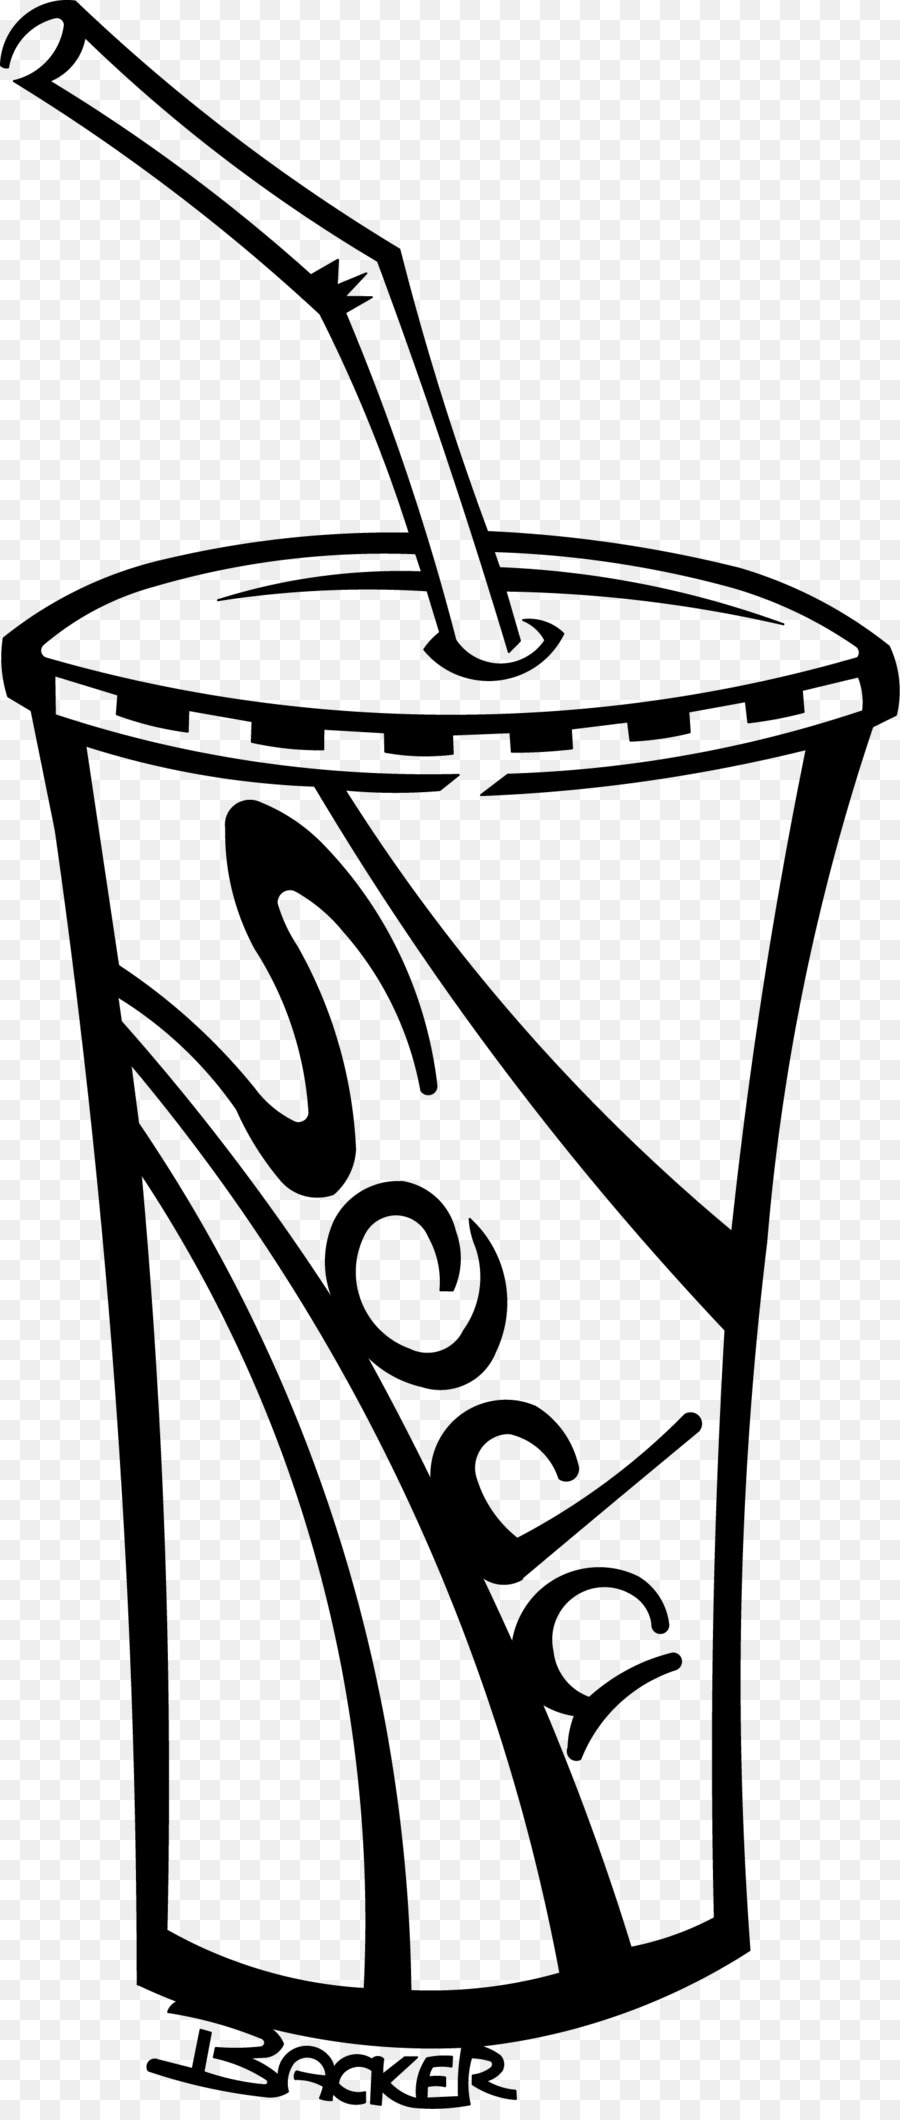 Kohlensäurehaltige Getränke Cup Clip art - Design